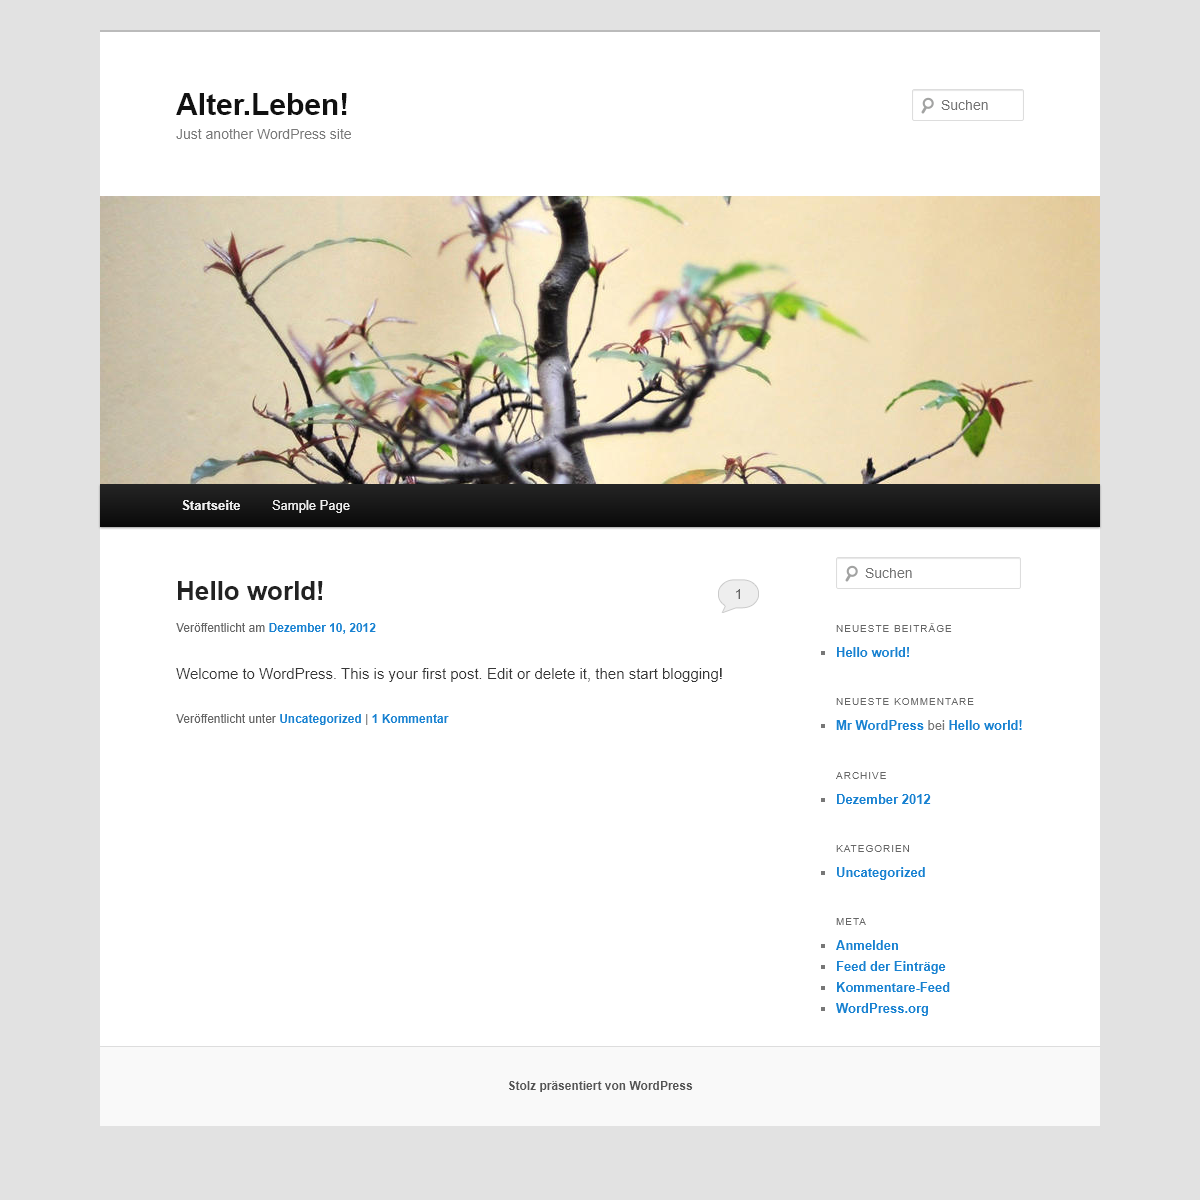 Alter.Leben! - Just another WordPress site